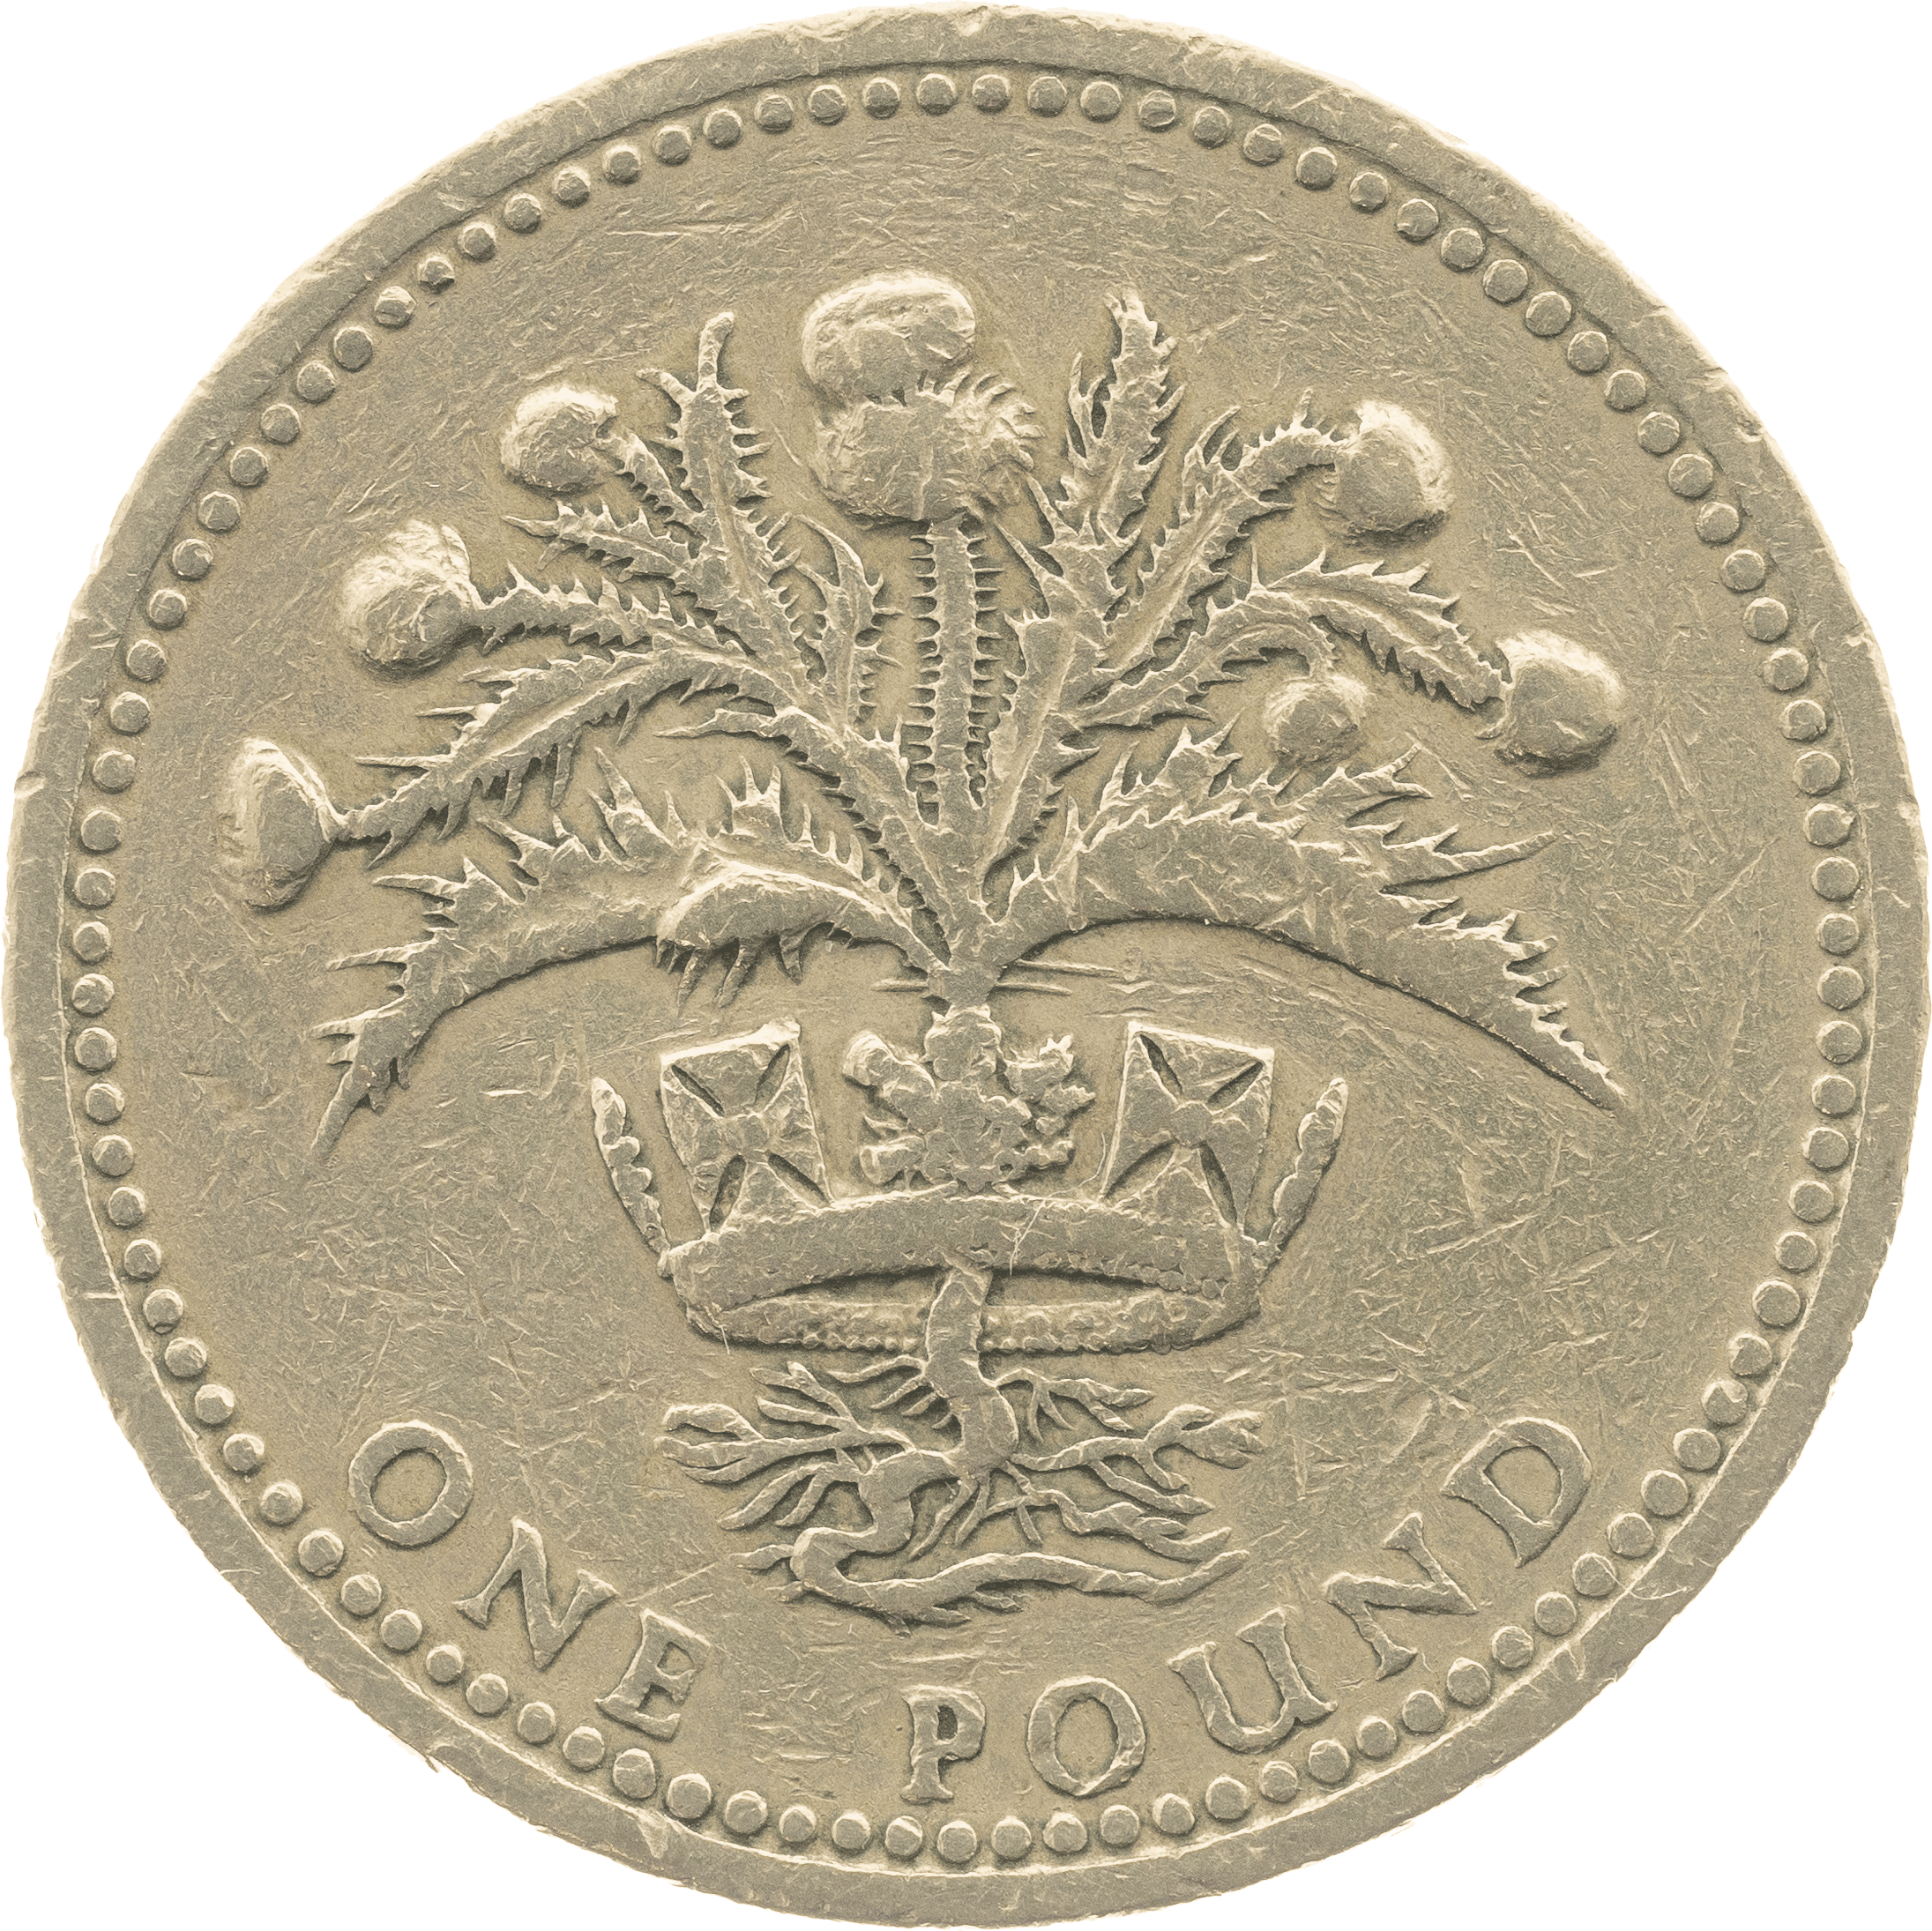 Thistle £1 Coin Design